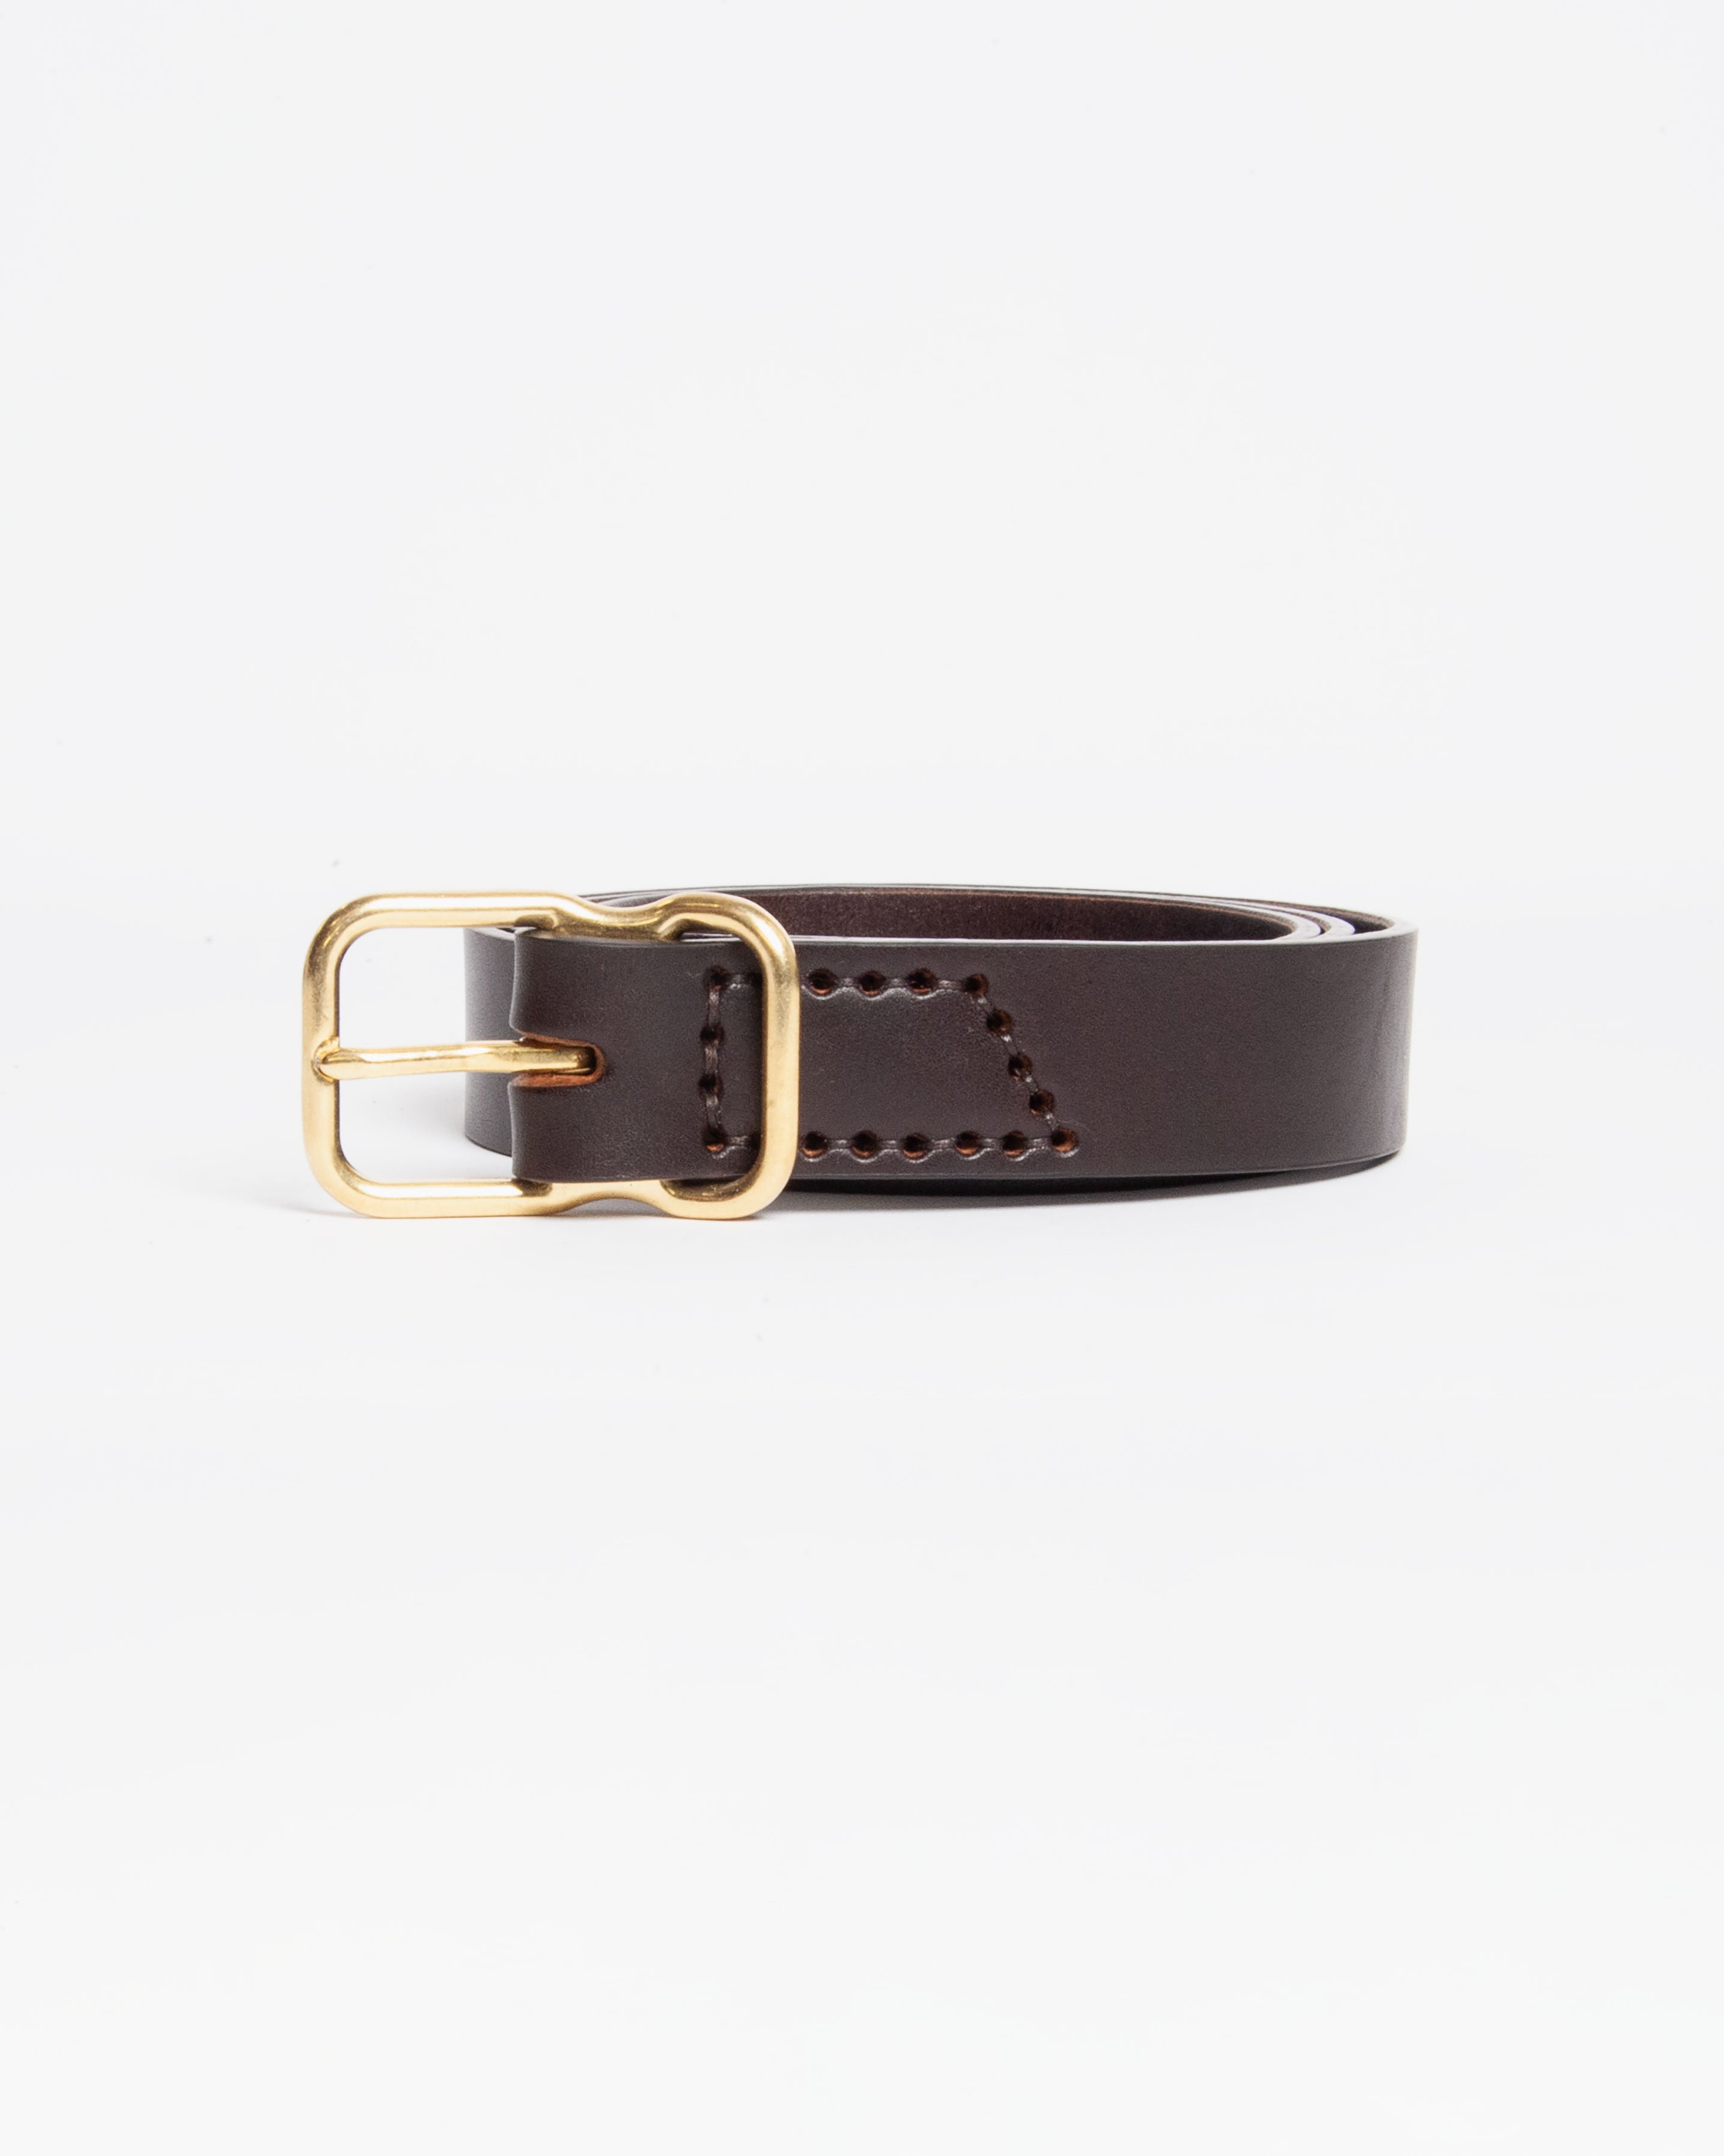 118 Signature Leather Belt - Narrow - Dark Brown - Brass